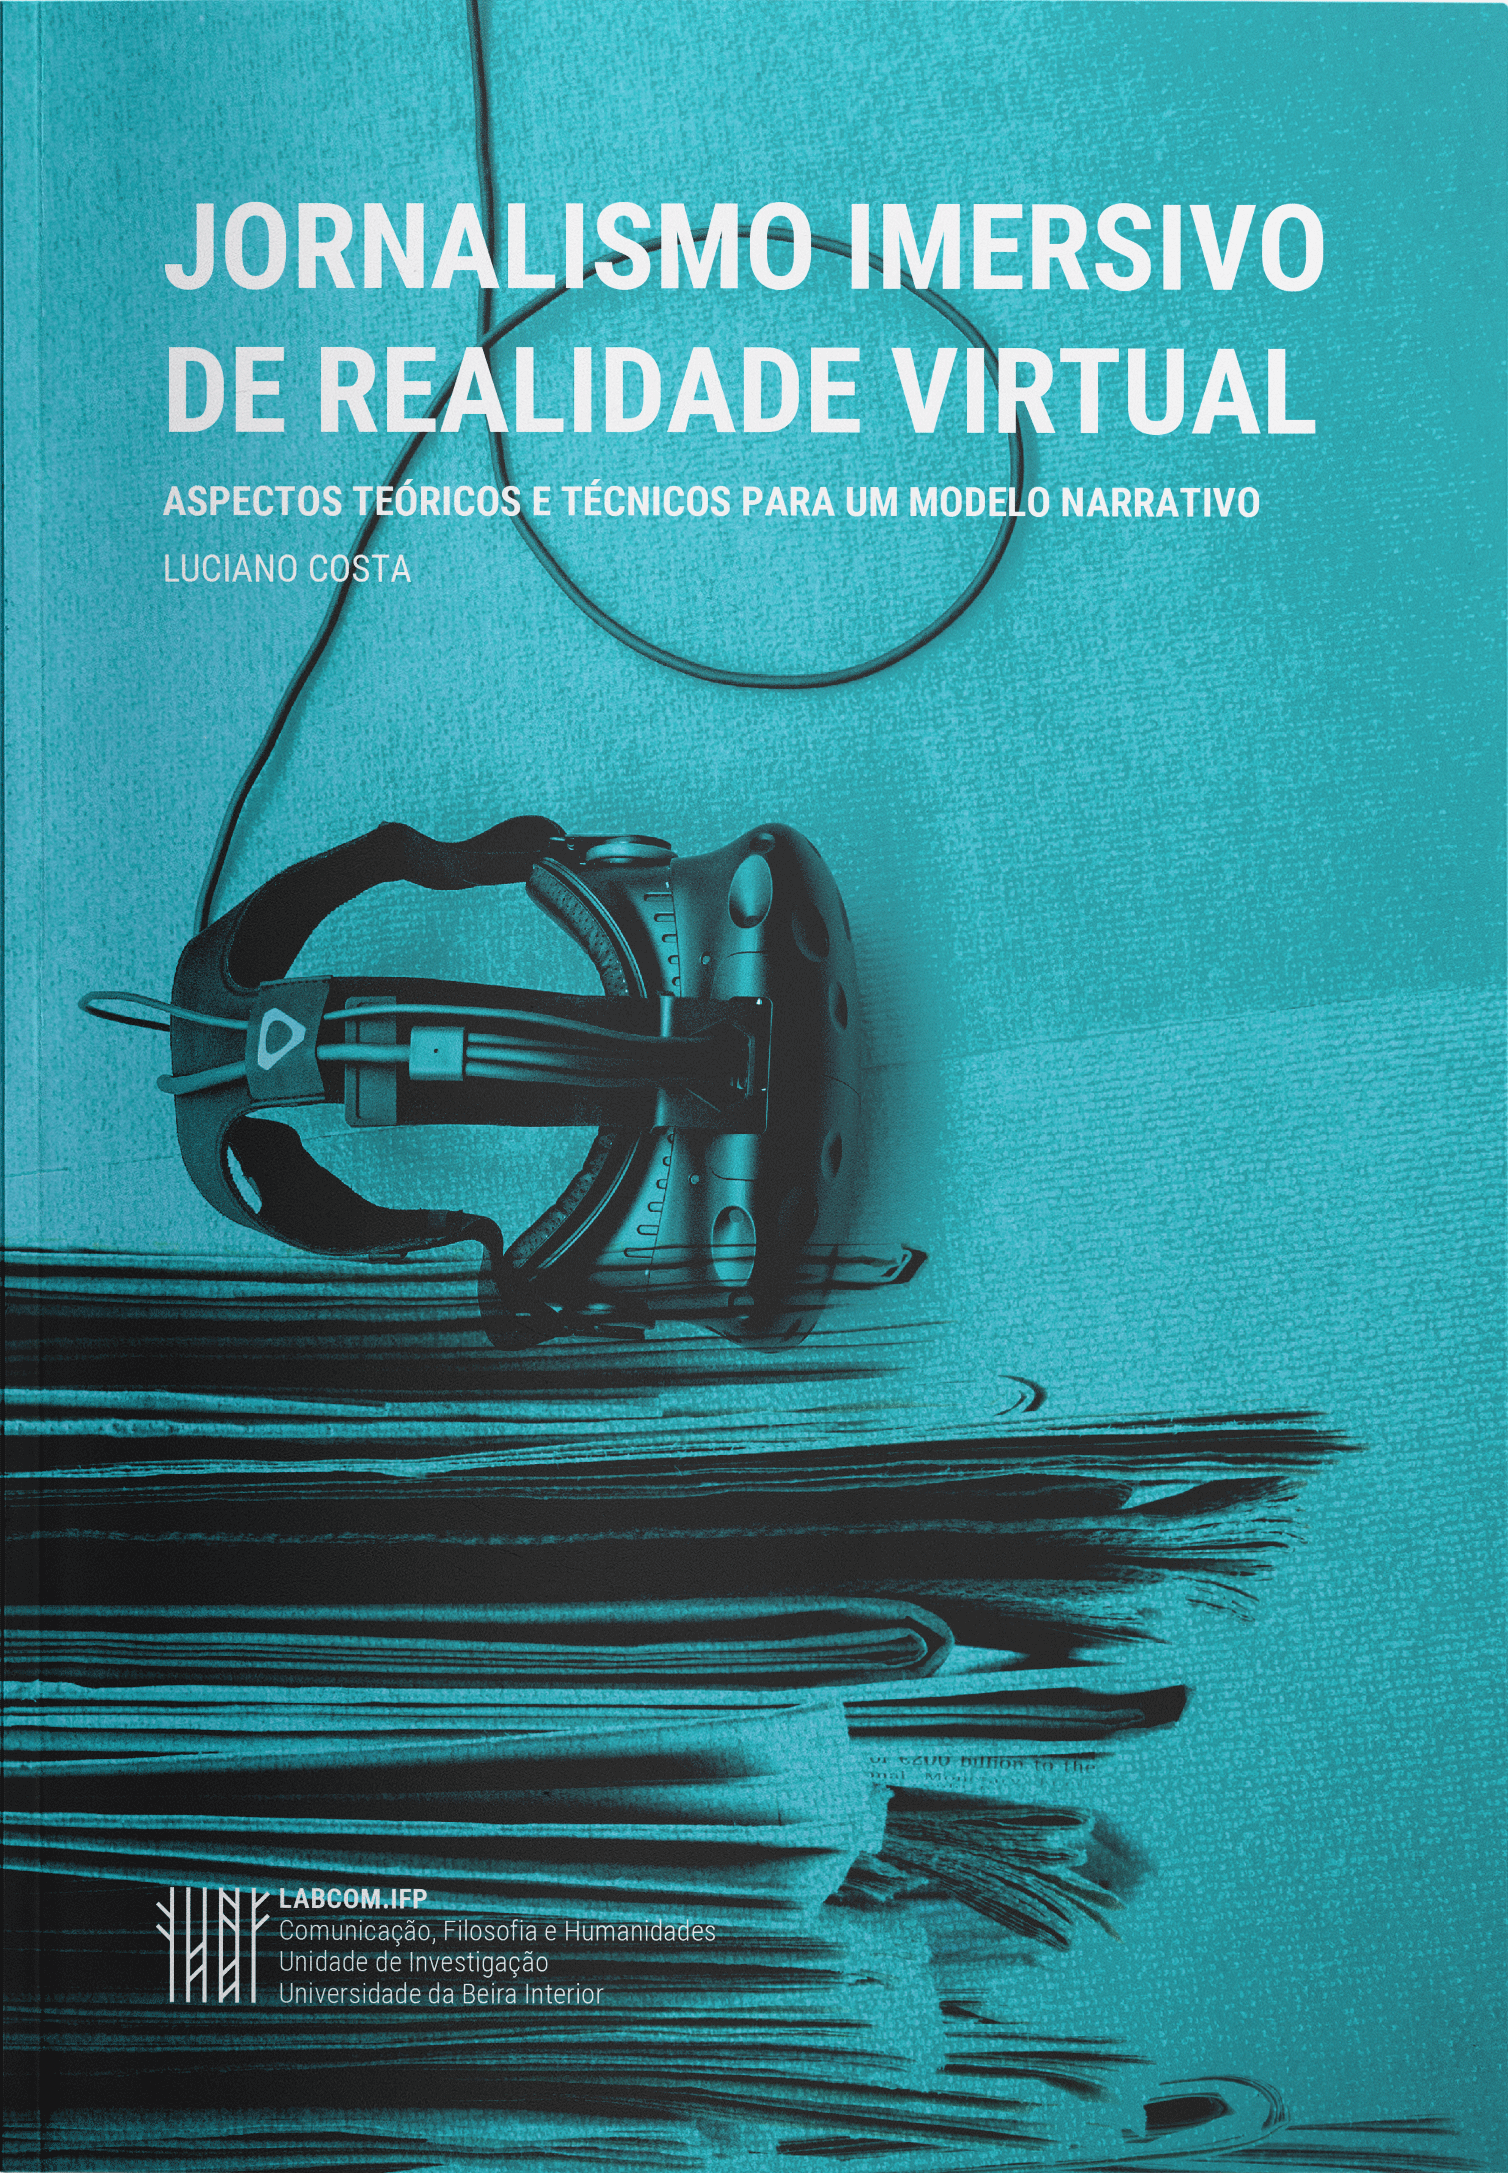 Capa: Luciano Costa (2019) Jornalismo Imersivo de Realidade Virtual. Communication  +  Philosophy  +  Humanities. .